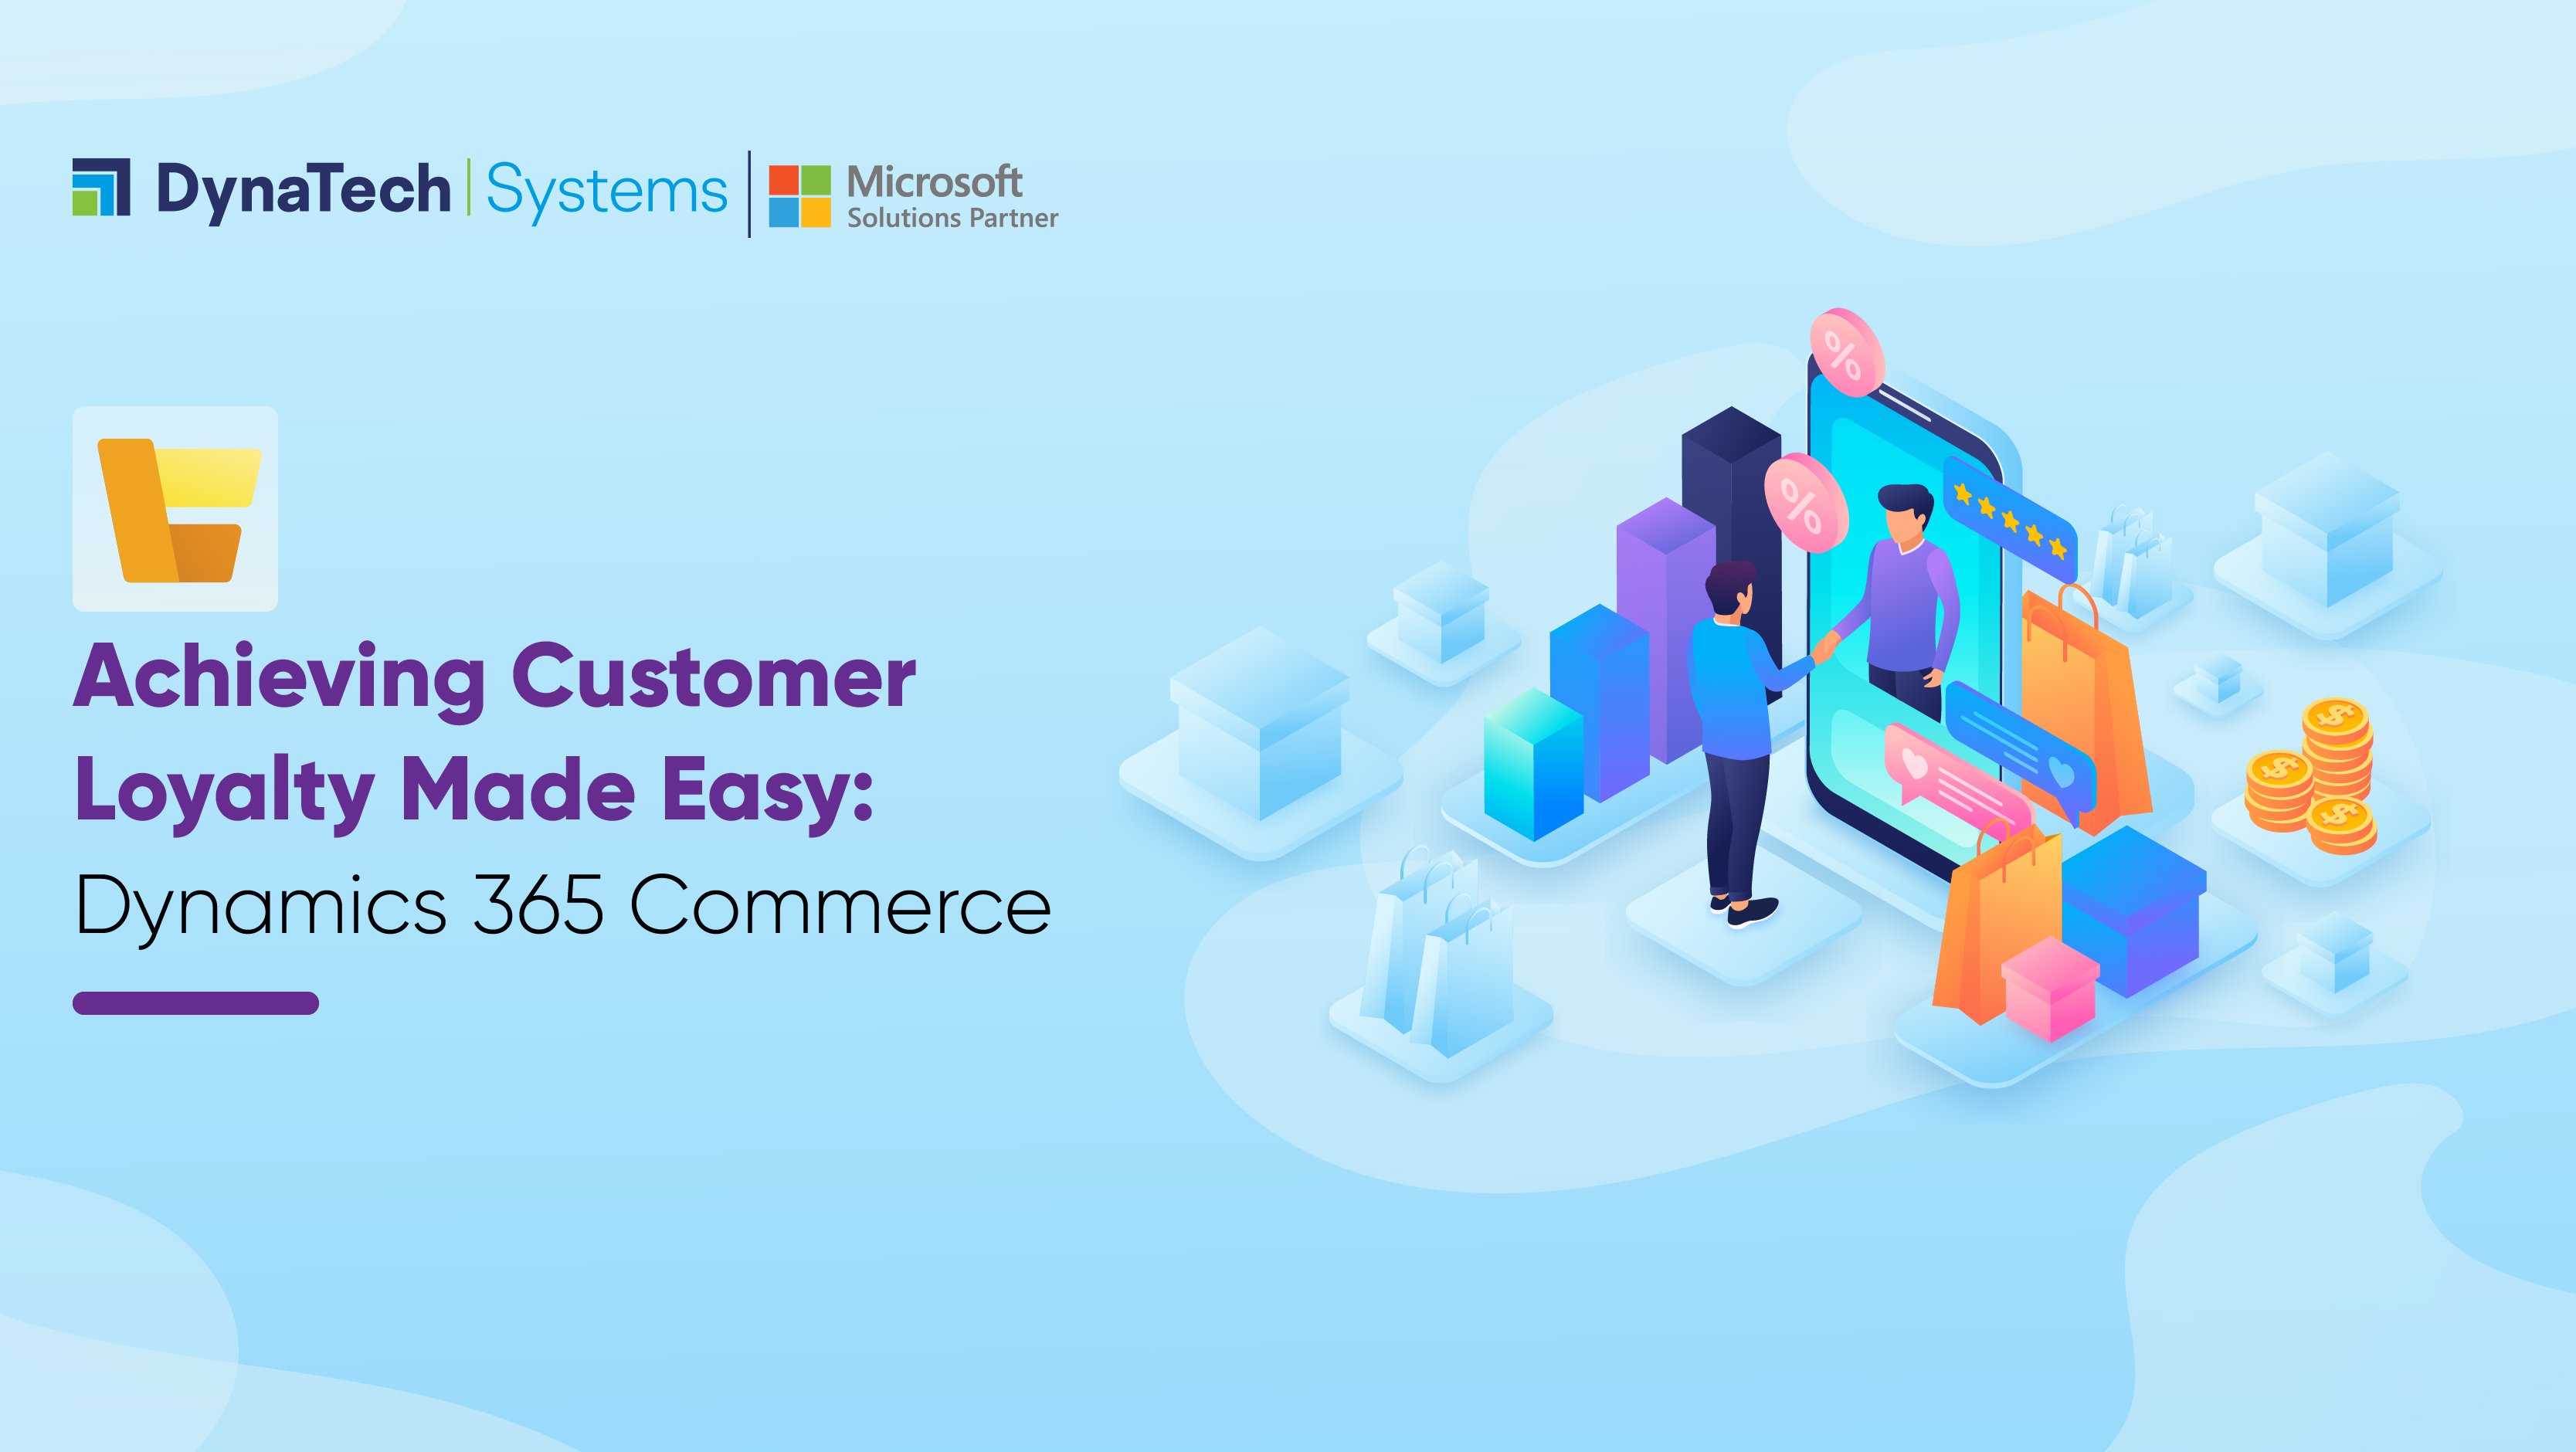 Enhance Customer Loyalty and Satisfaction through Microsoft Dynamics 365 Commerce’s Loyalty Programs